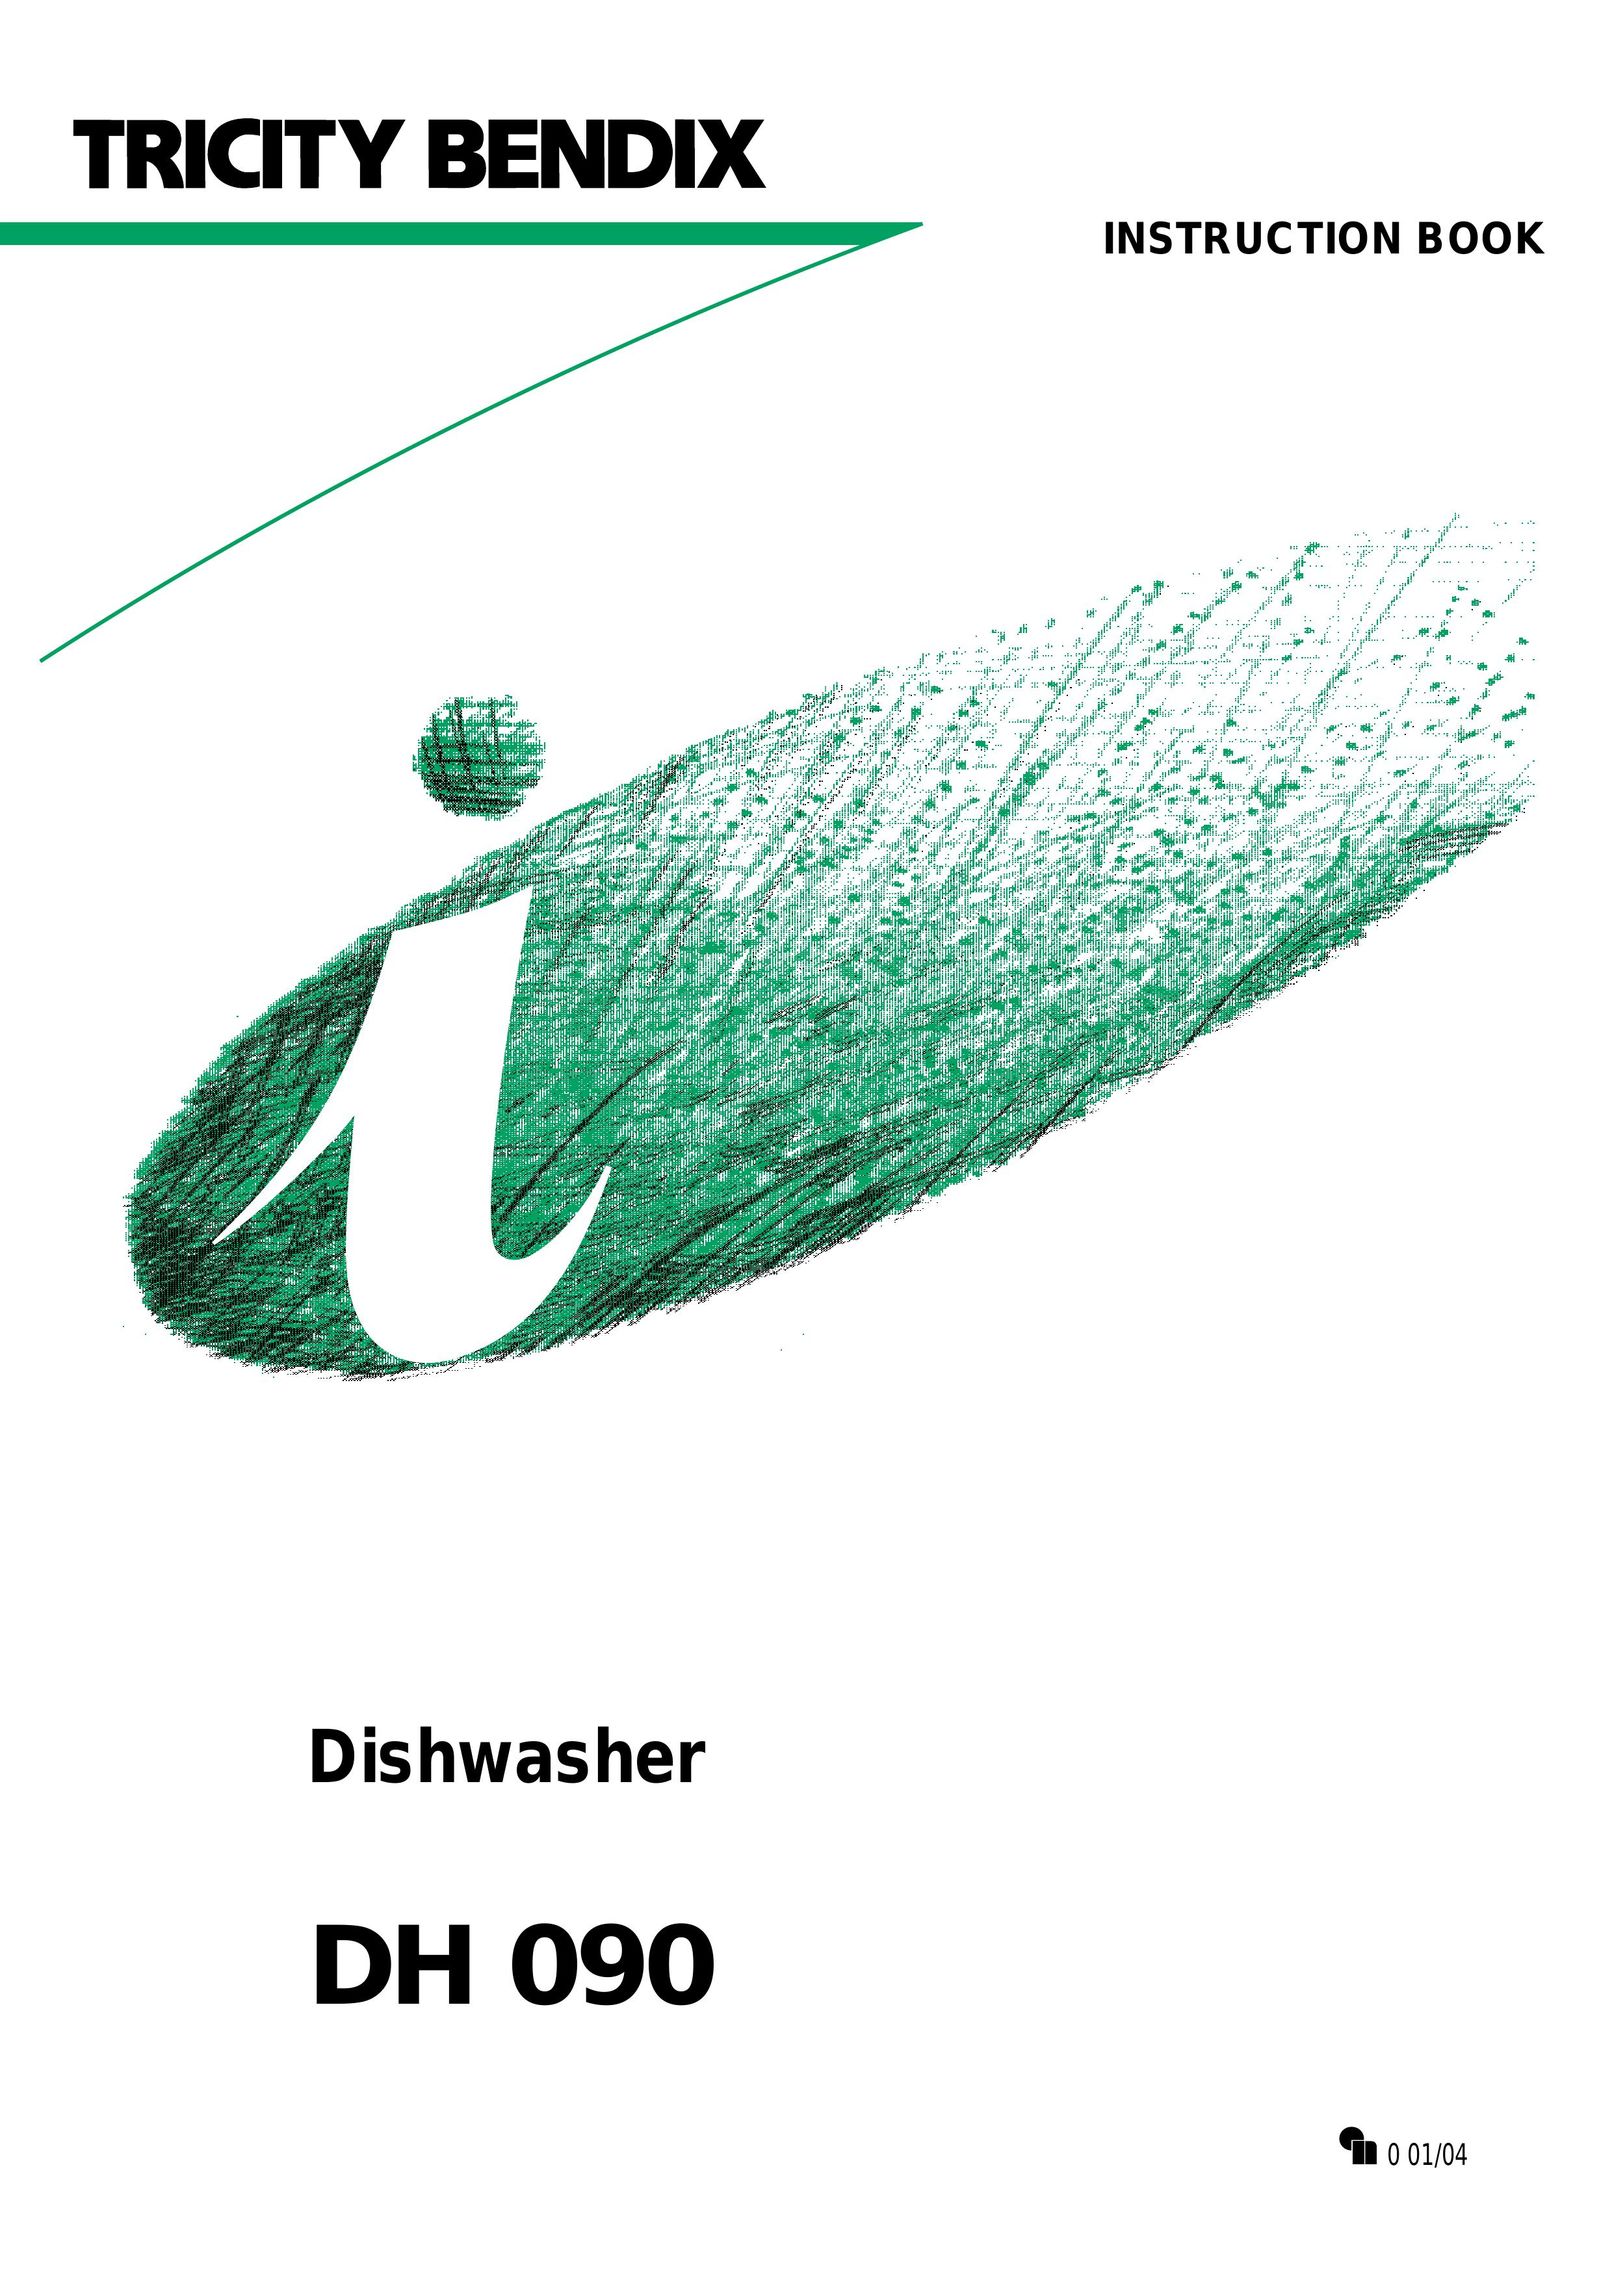 Tricity Bendix DH 090 Dishwasher User Manual